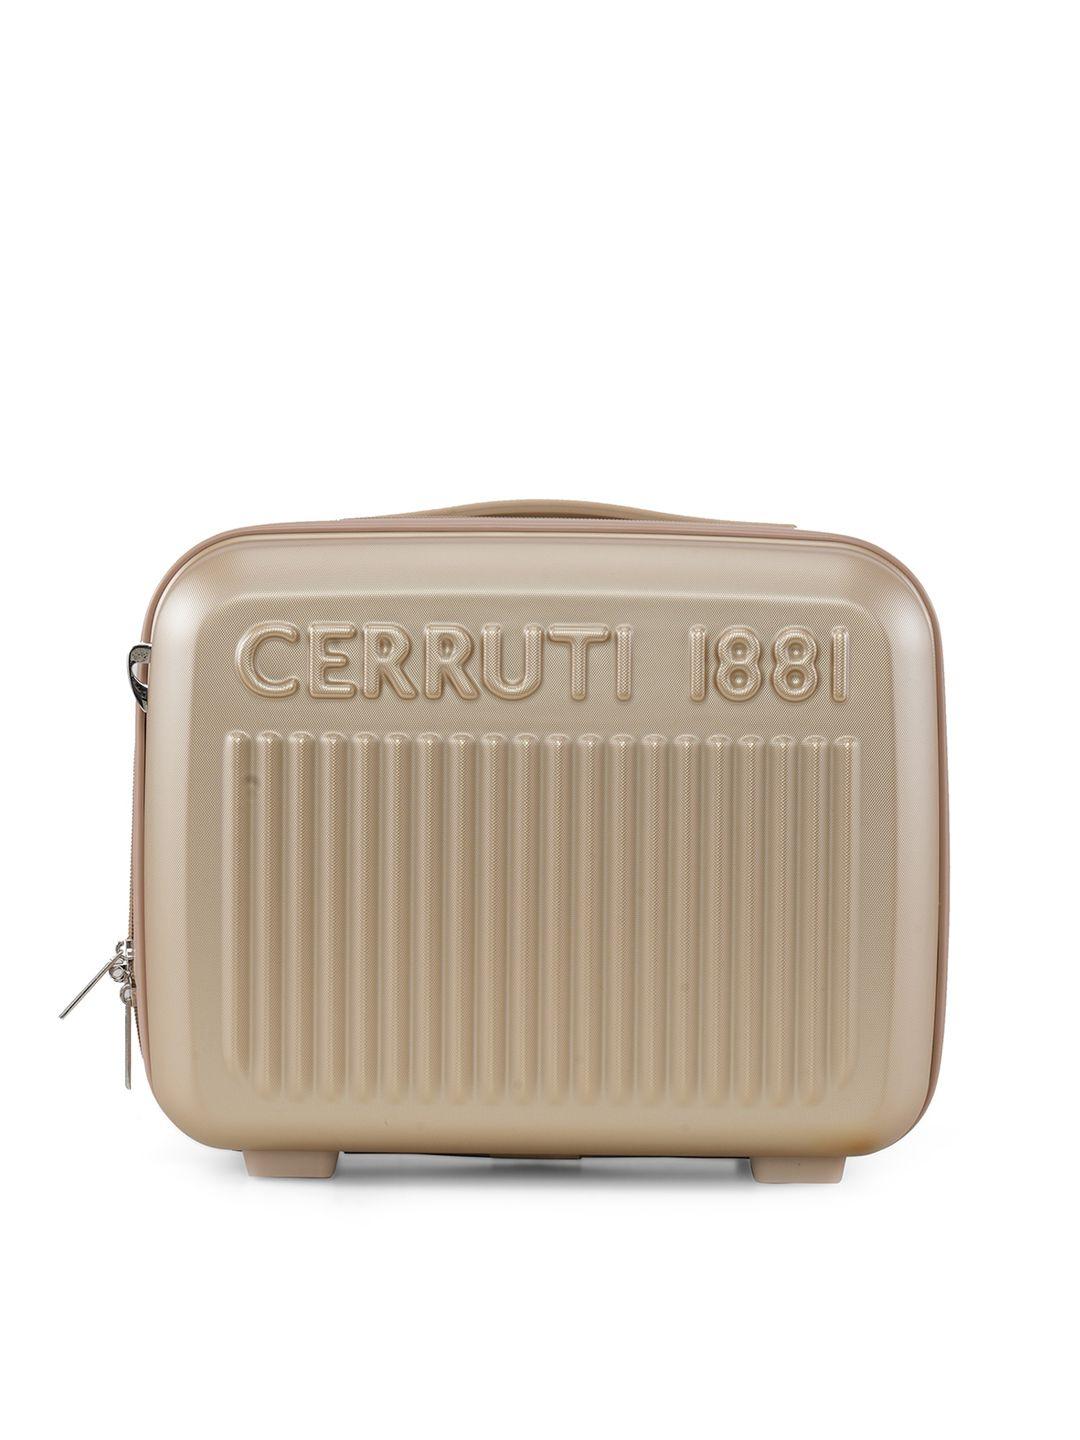 cerruti self-striped abs vanity bag travel accessory